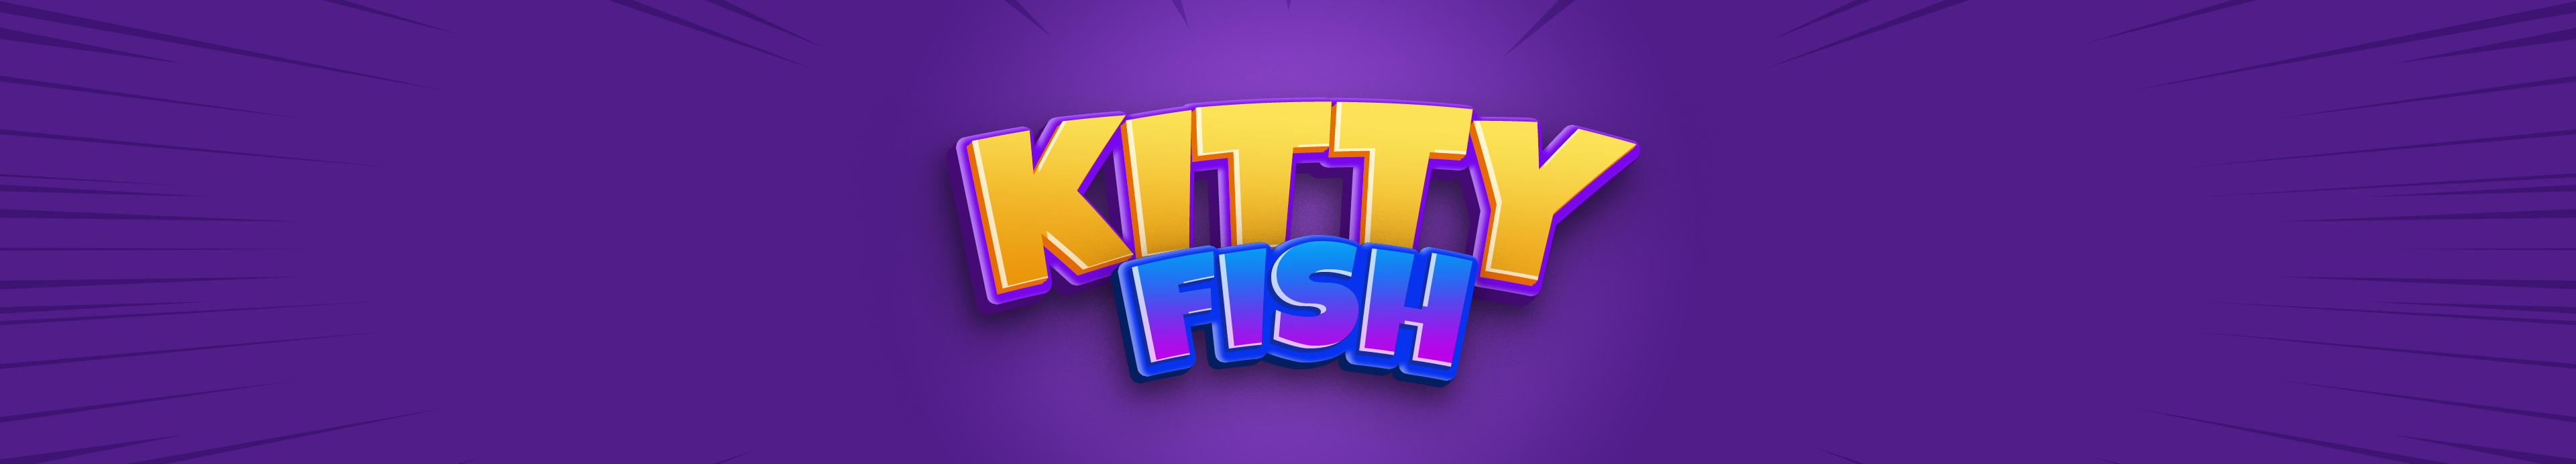 Kitty Fish